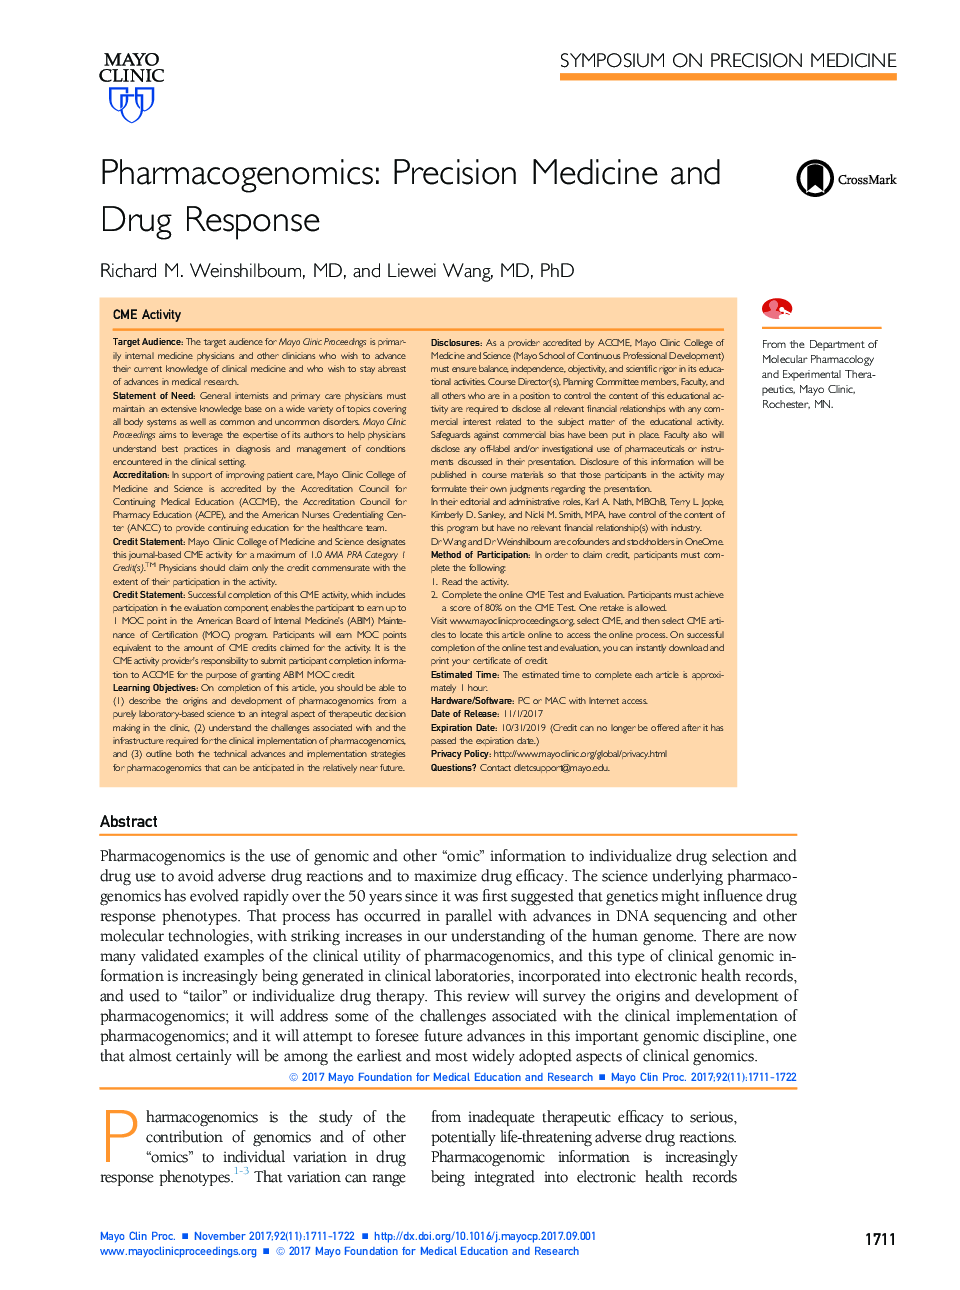 Pharmacogenomics: Precision Medicine and Drug Response